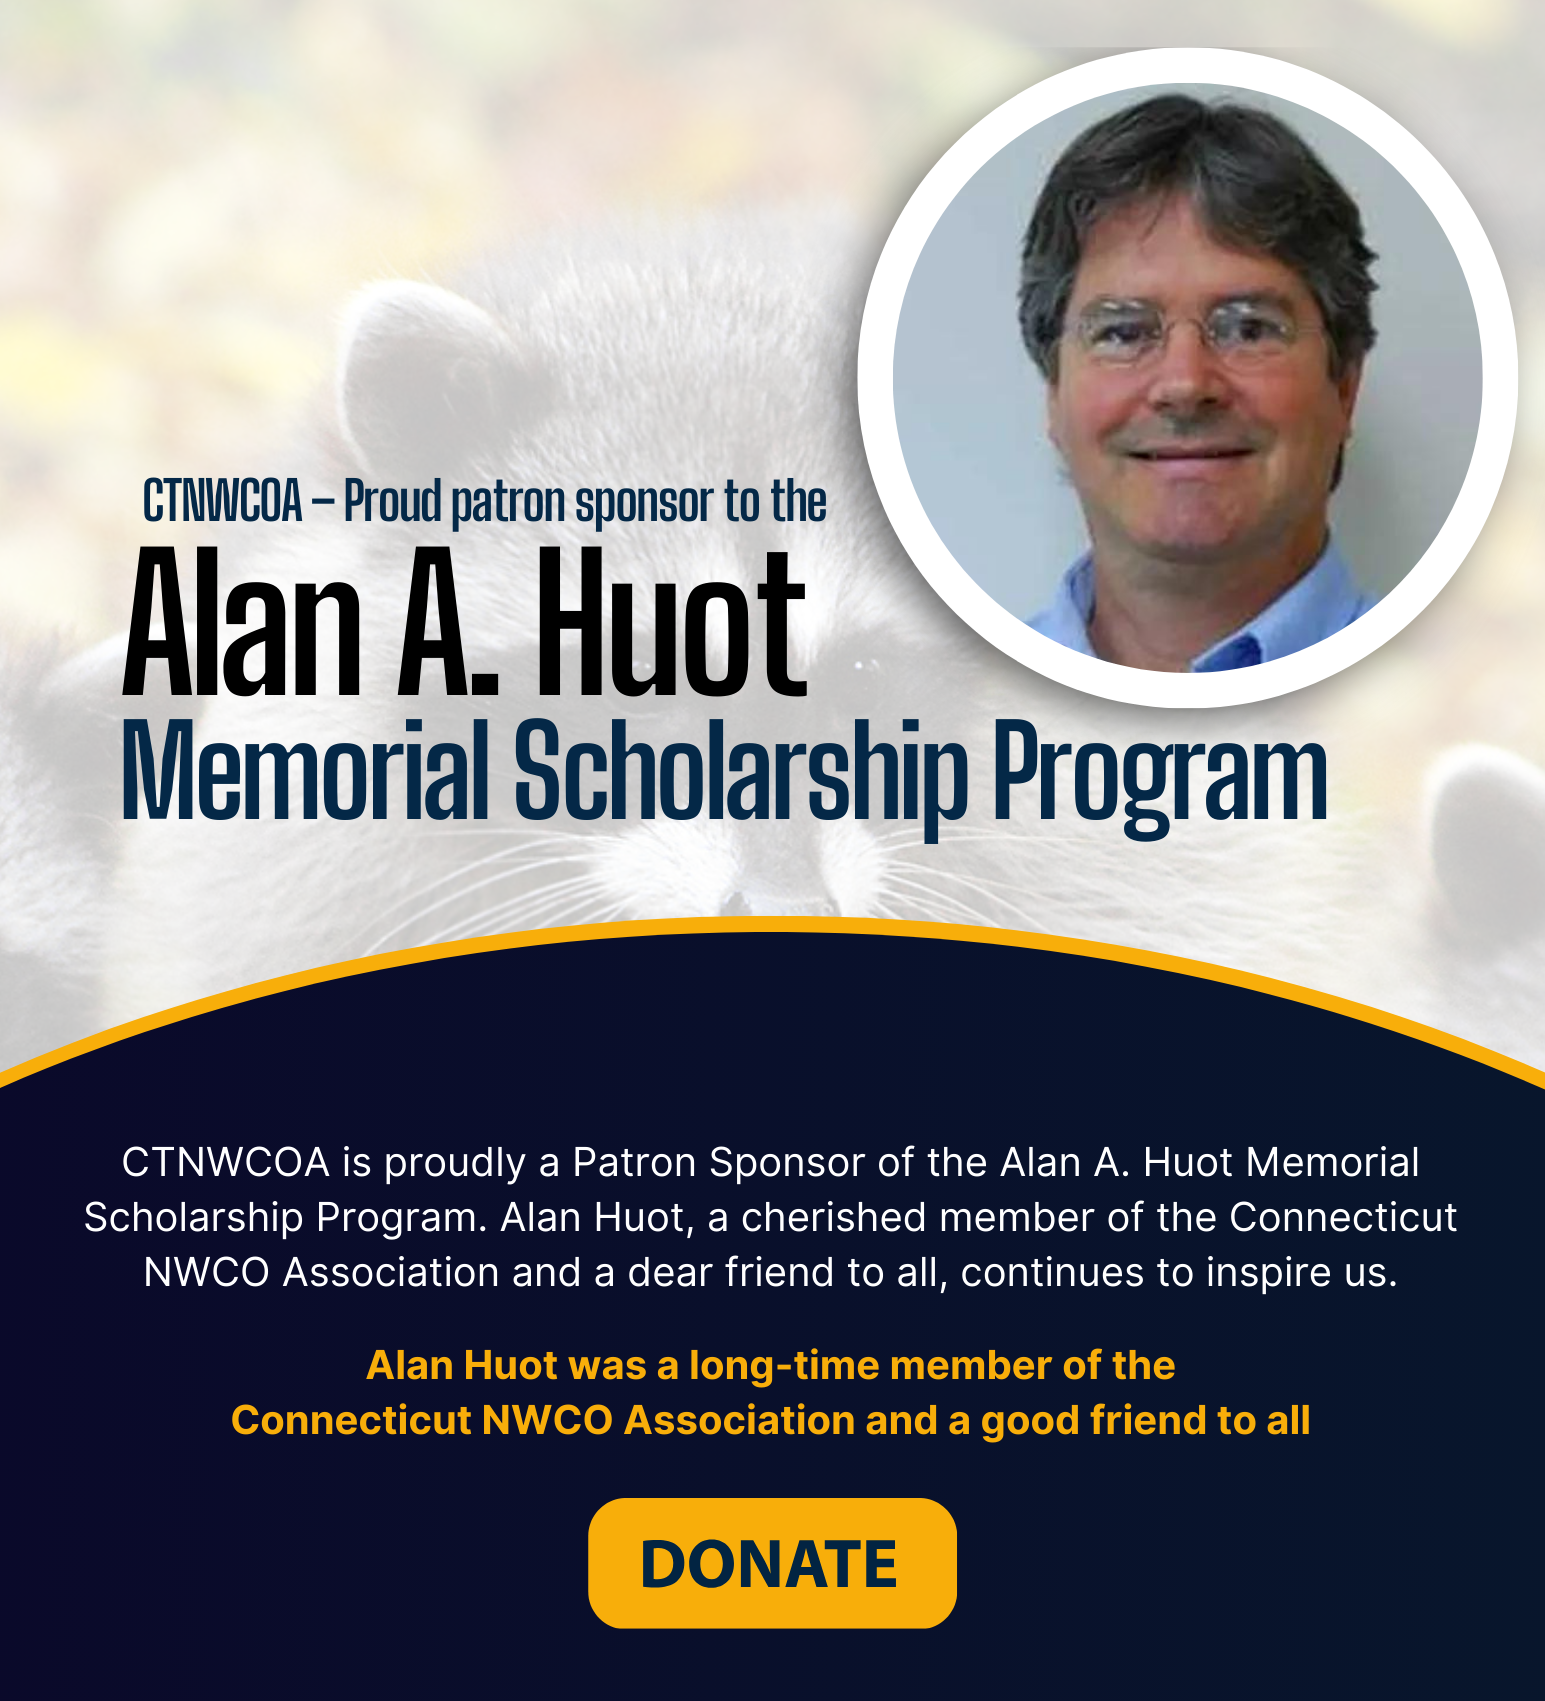 Alan A. Huot Memorial Scholarship Program ad